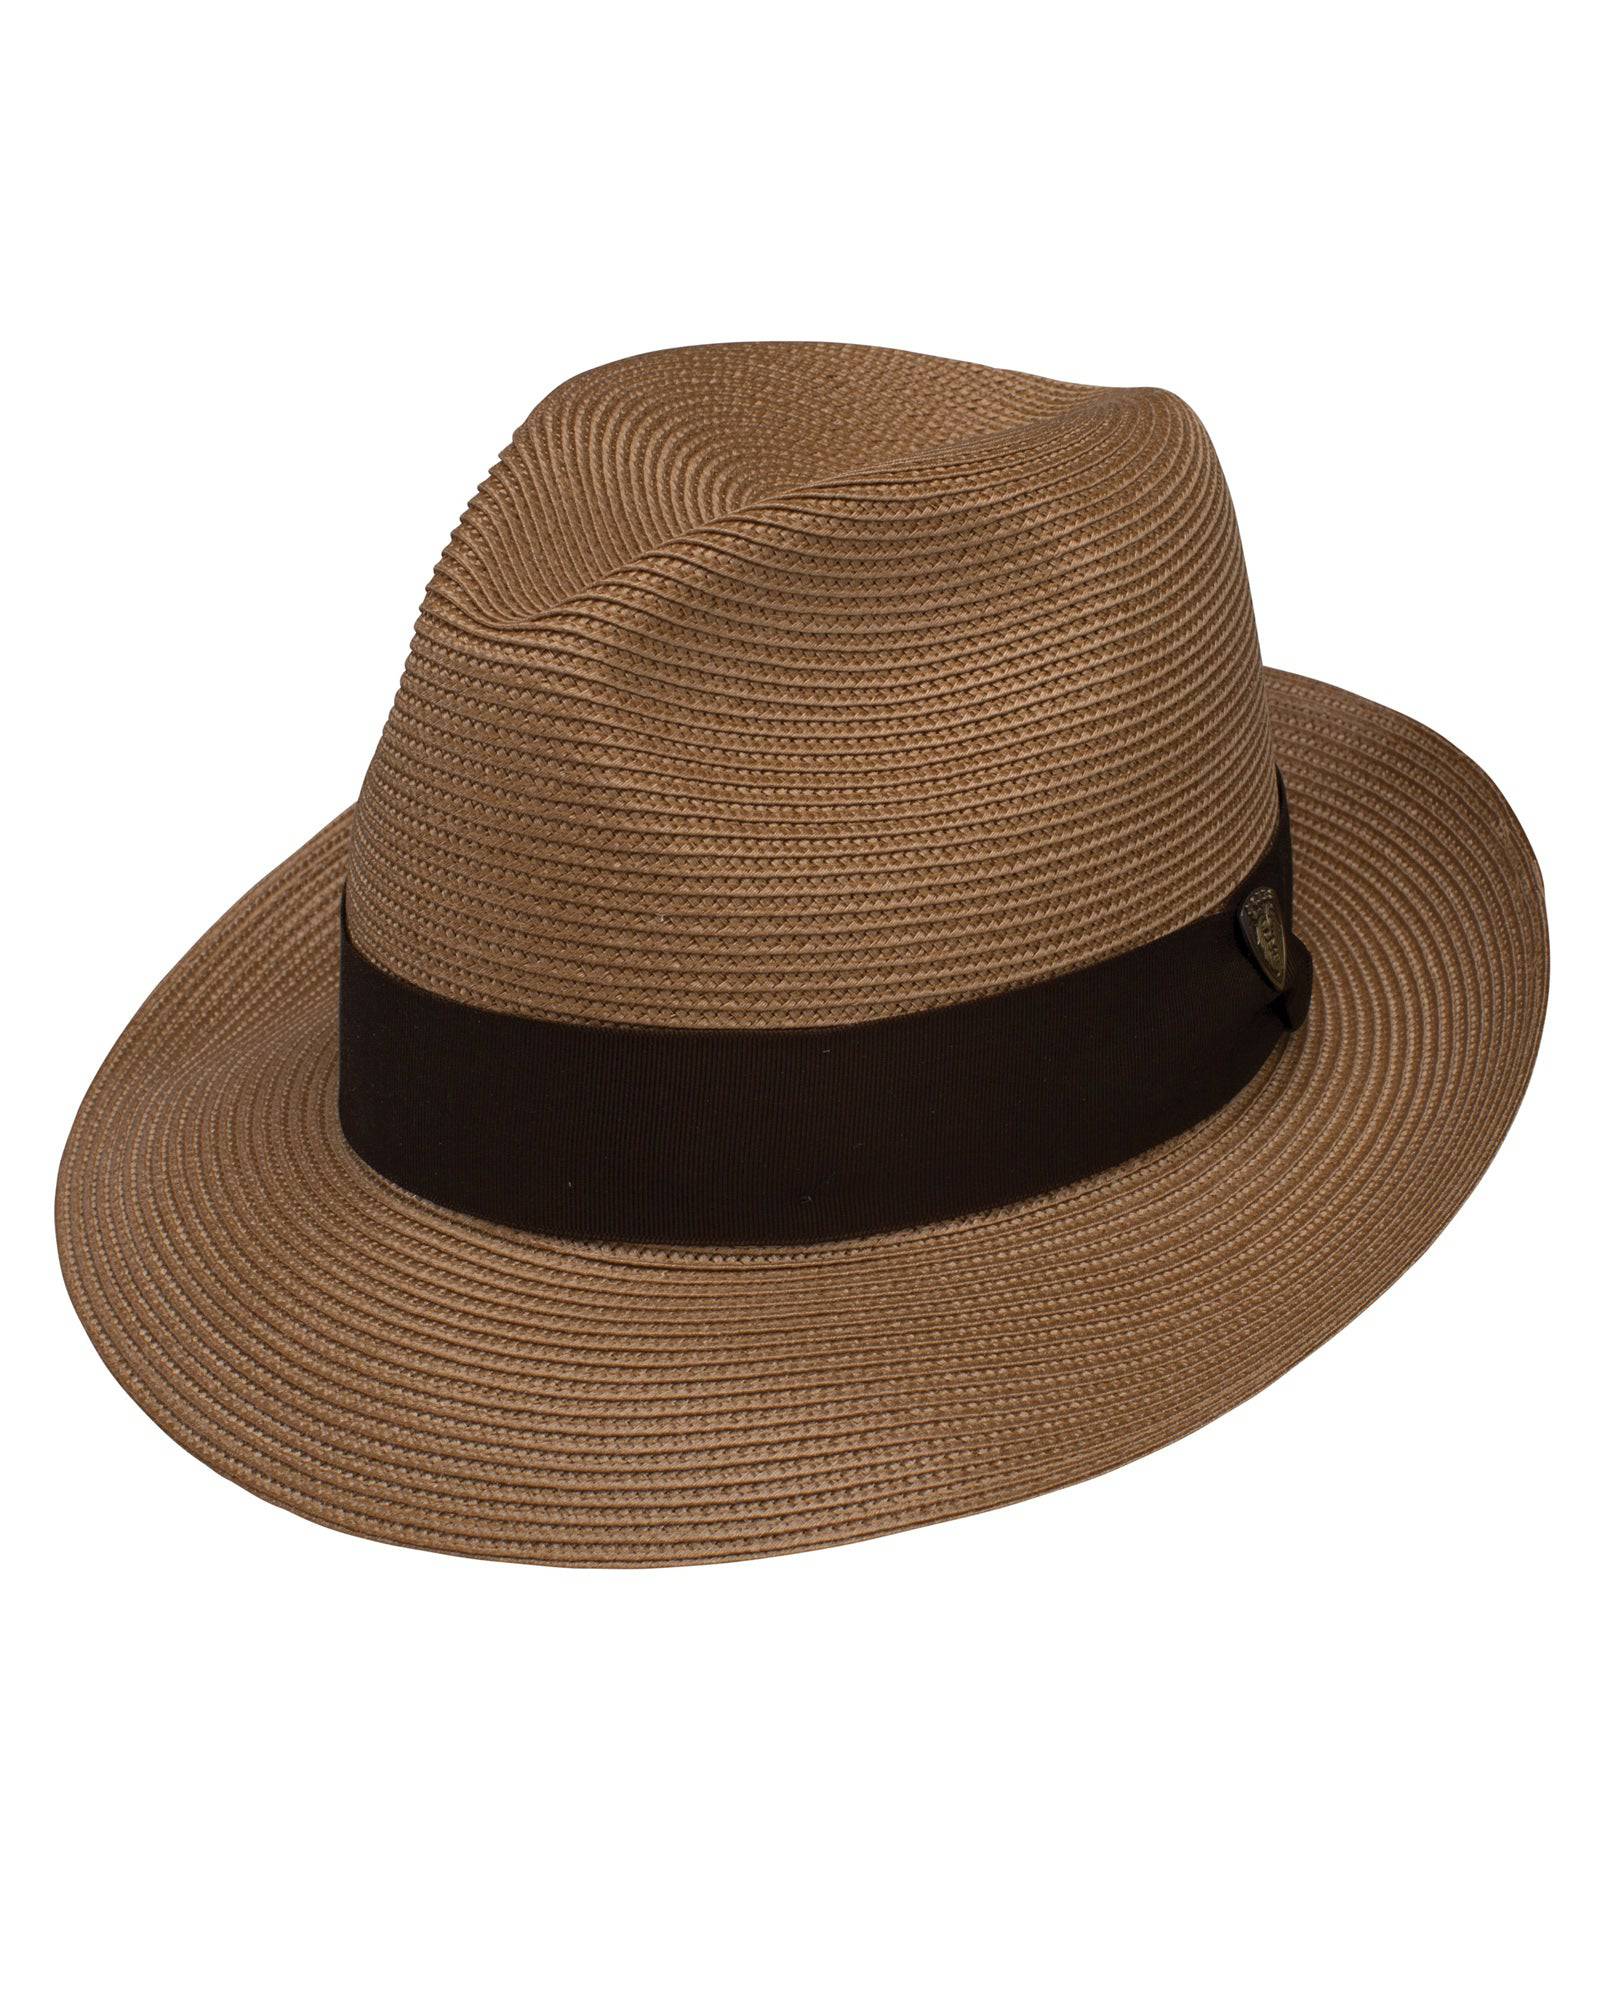 Dobbs Rosebud Straw Hat in Cognac - Rainwater's Men's Clothing and Tuxedo Rental